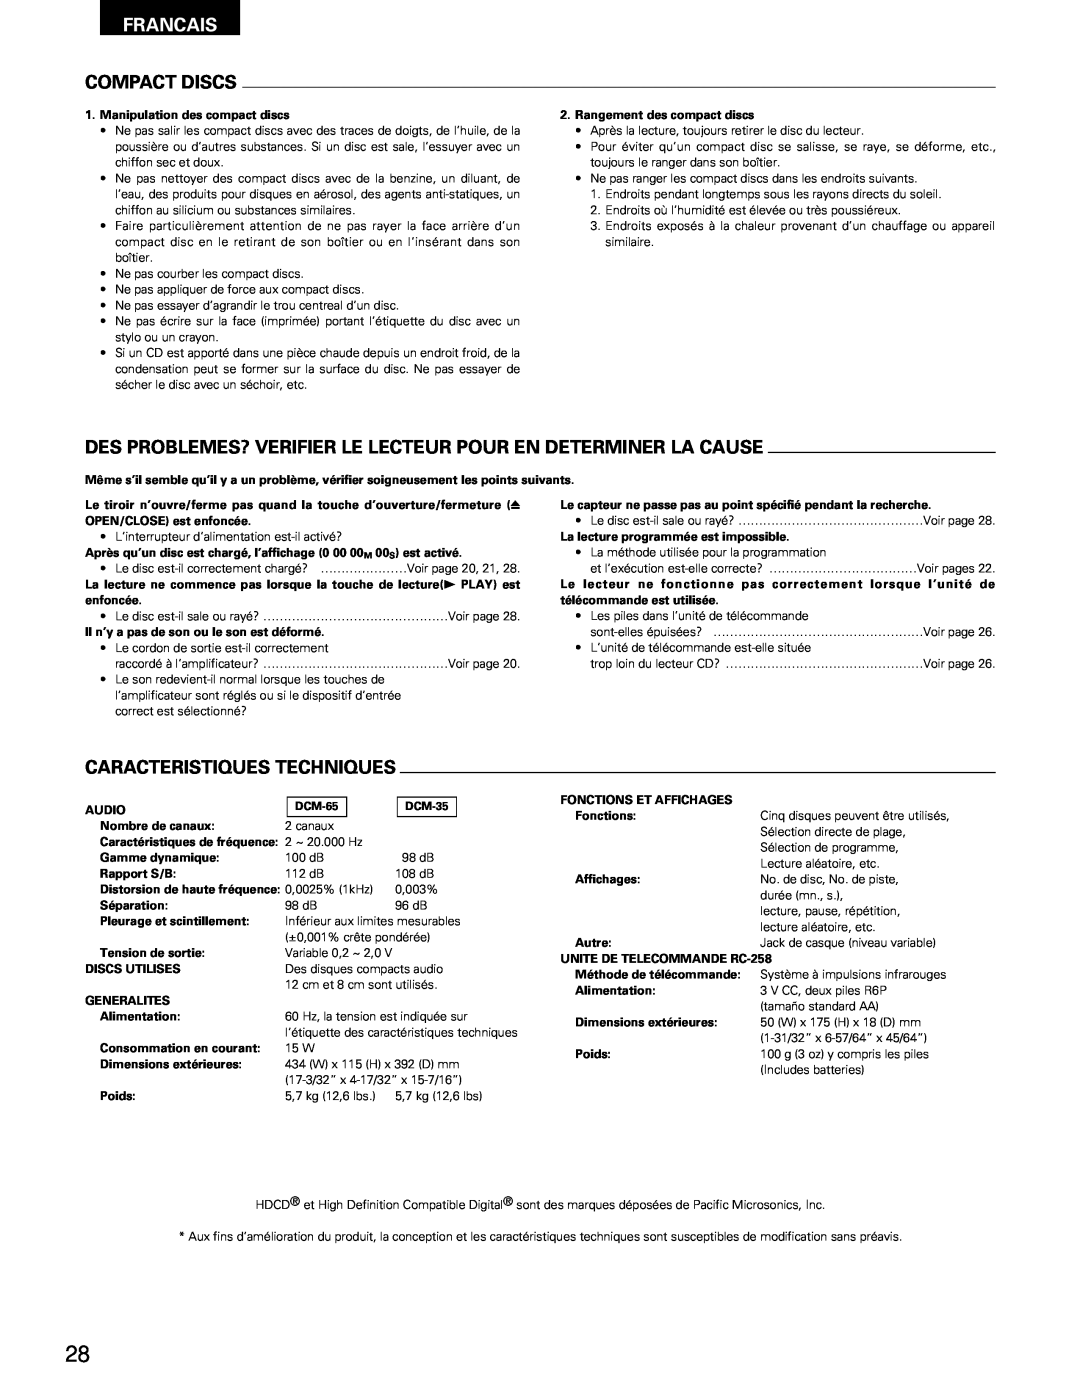 Denon DCM-65/35 manual Caracteristiques Techniques, Francais, Compact Discs 